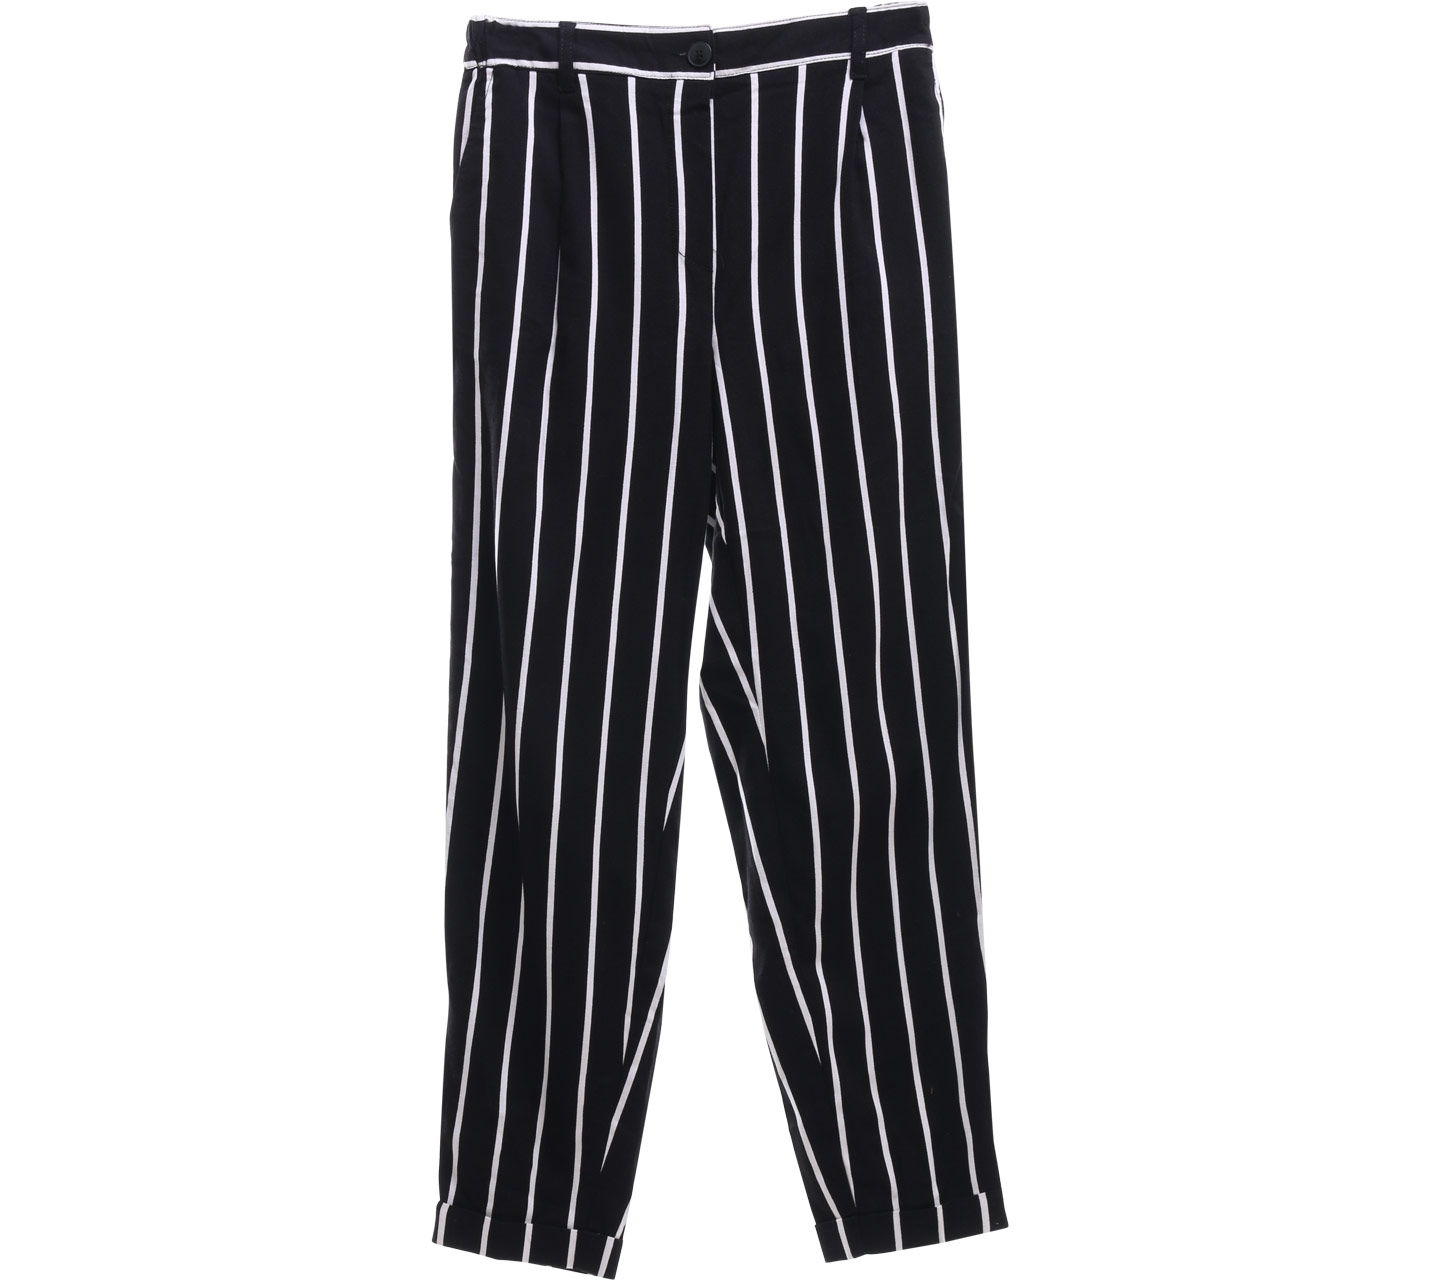 Bershka Stripes Black White Long Pants